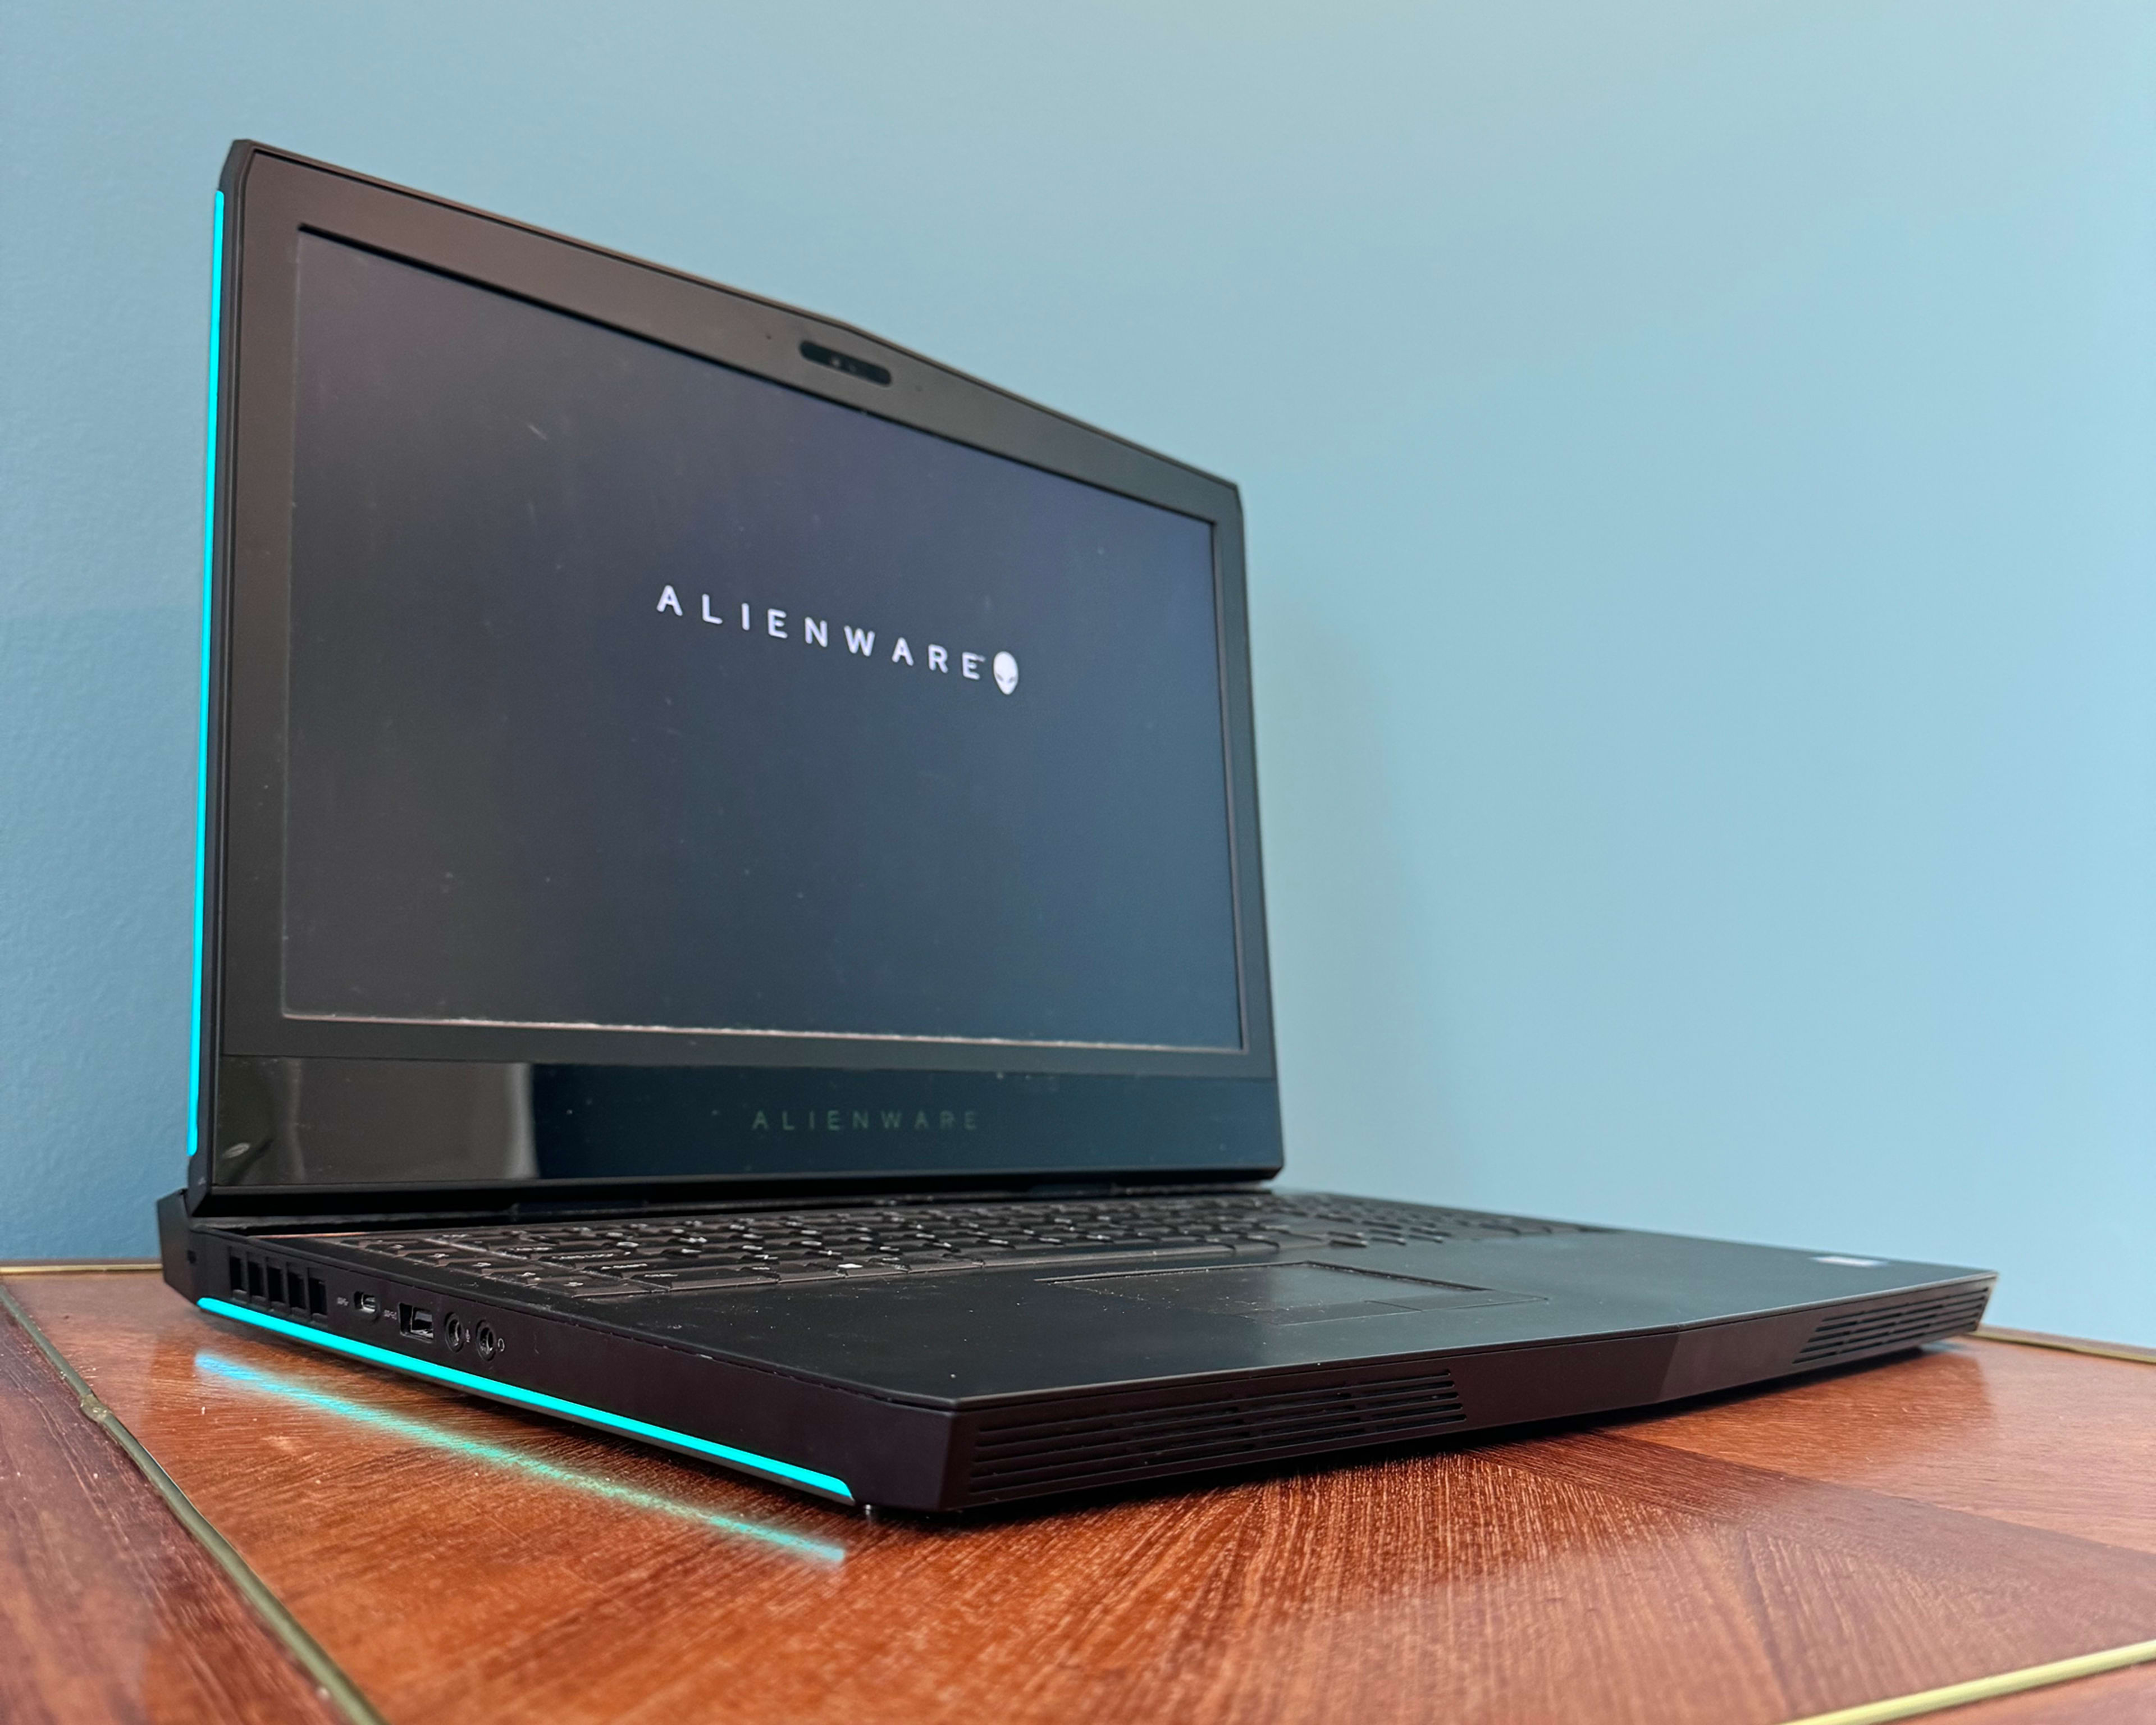 Alienware Laptop | GTX 1050 TI, Core i7, 8GB DDR4 Ram, 150GB SSD, 1080p 60hz